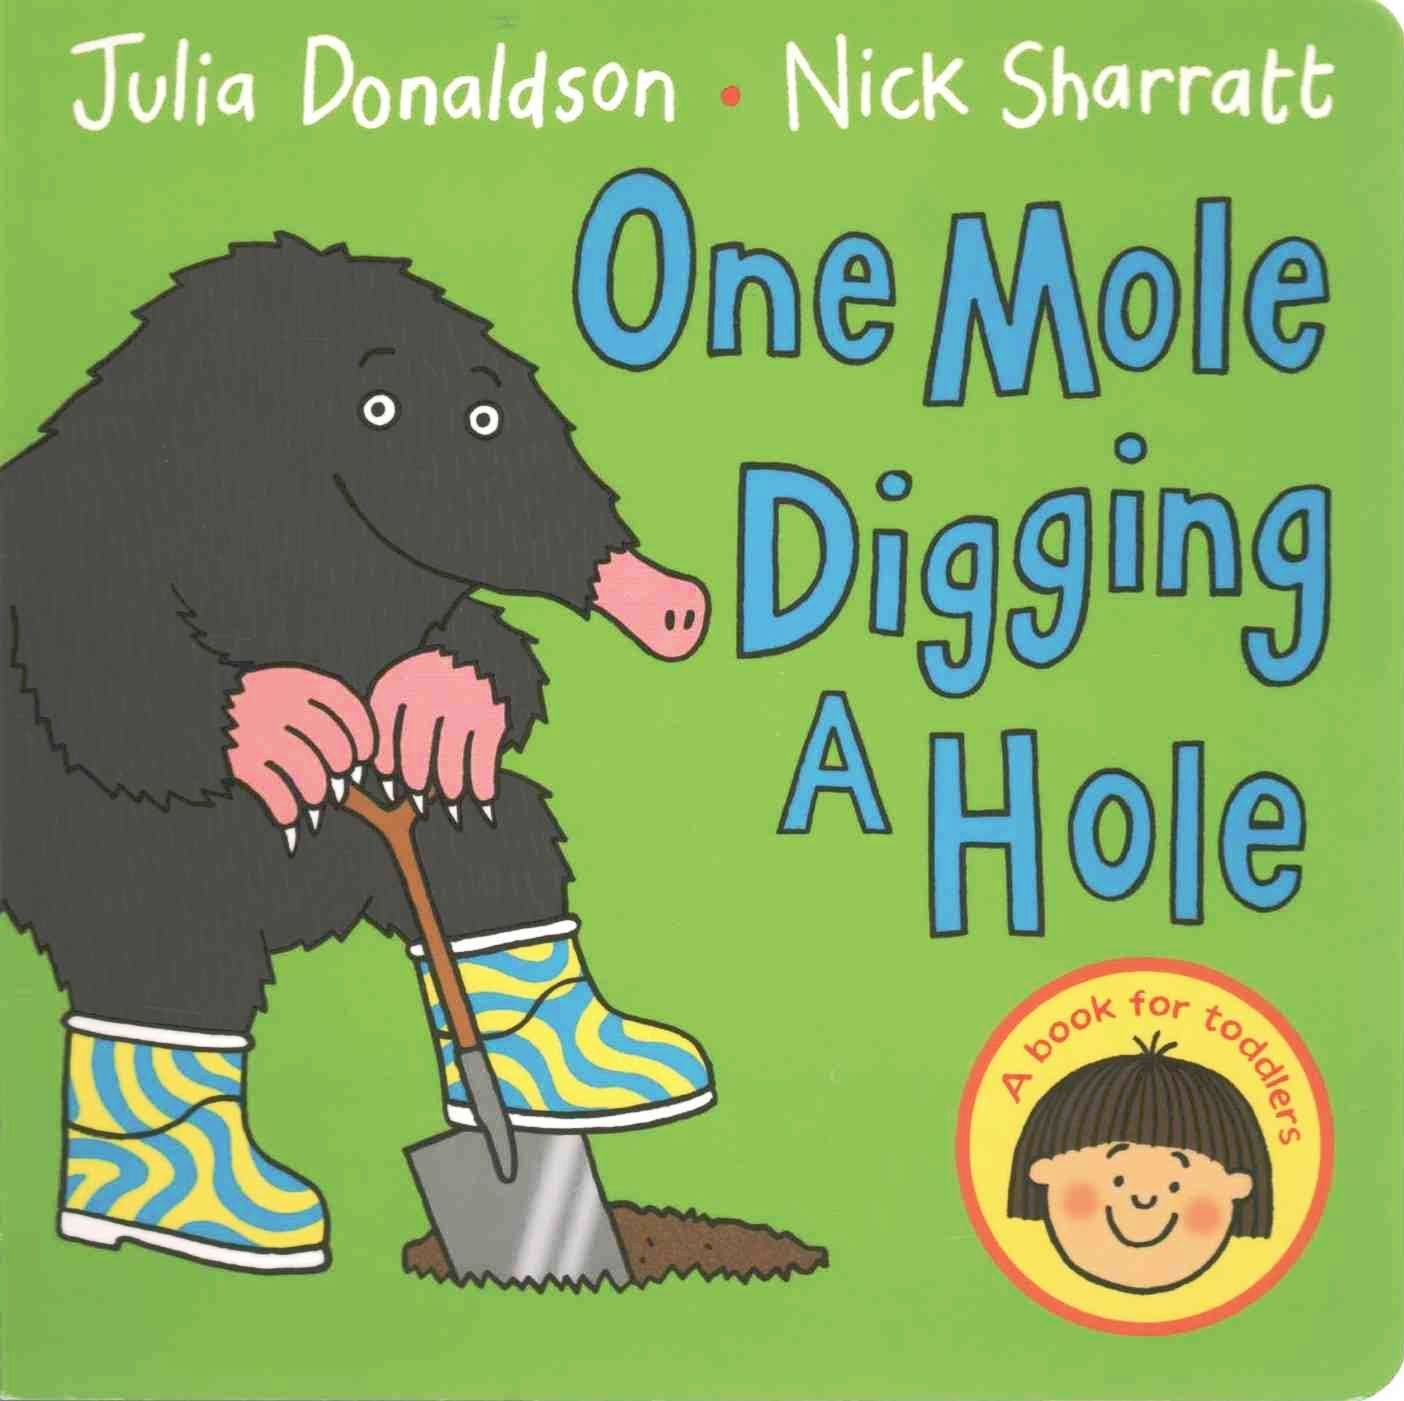 One mole digging a hole 책표지